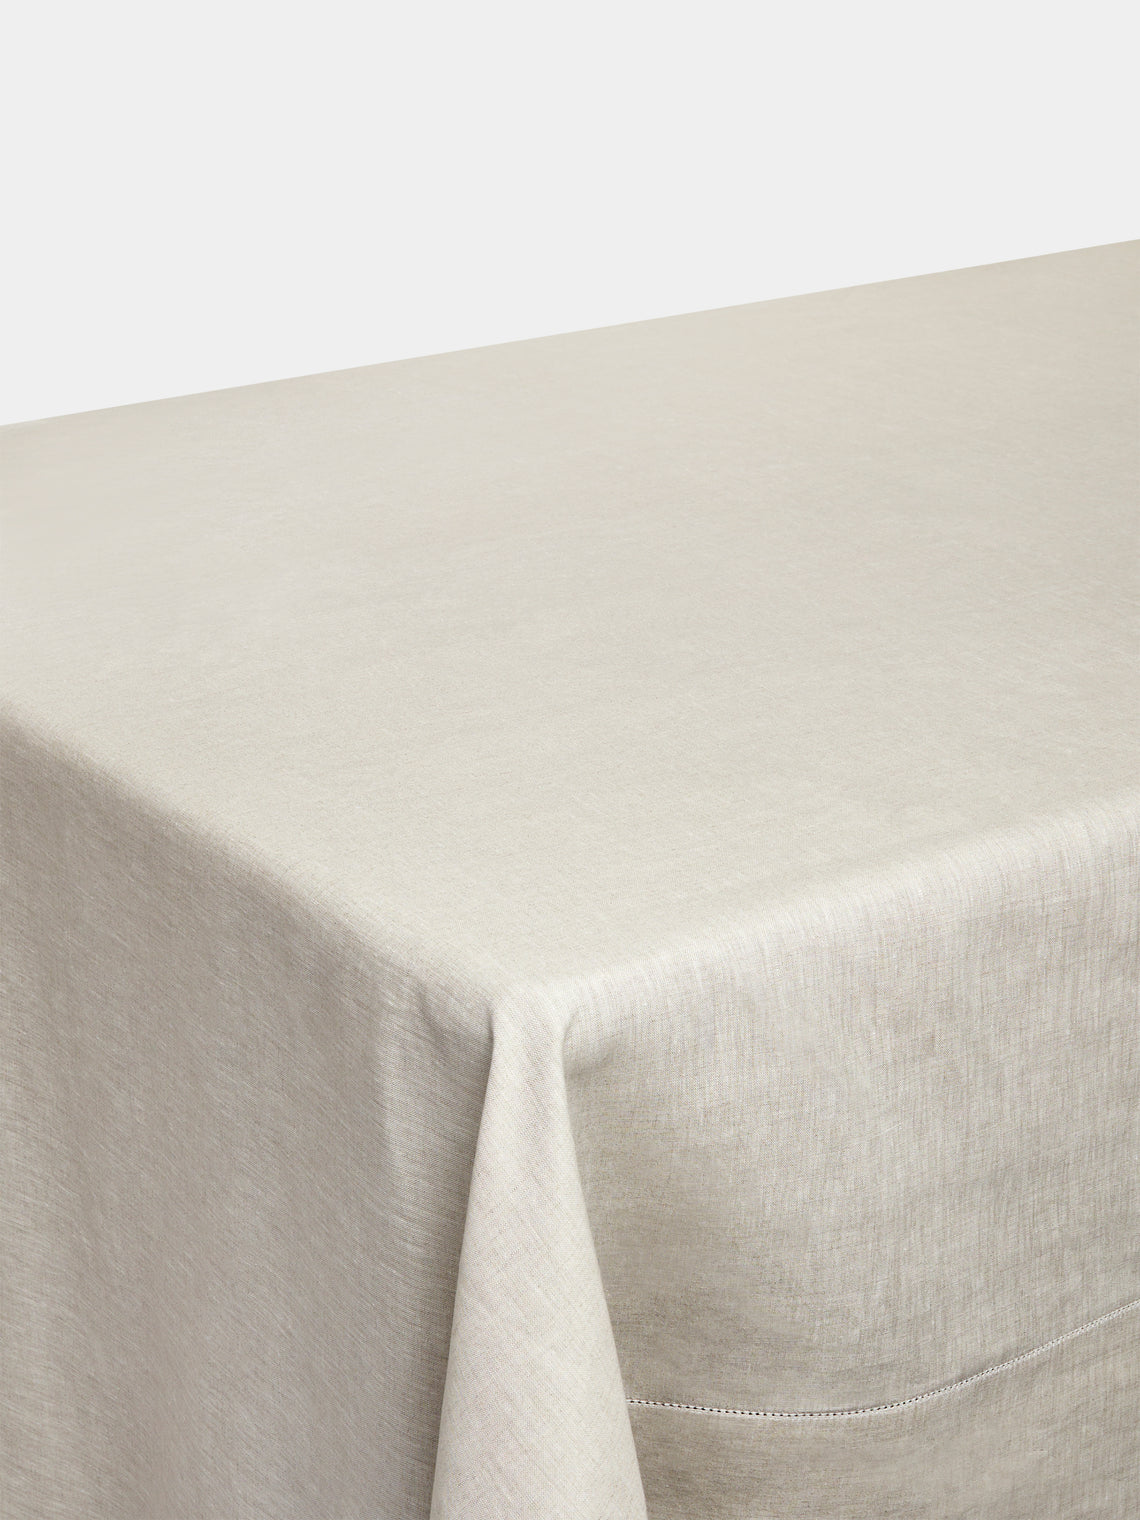 Angela Wickstead - Capri Linen Tablecloth - Grey - ABASK